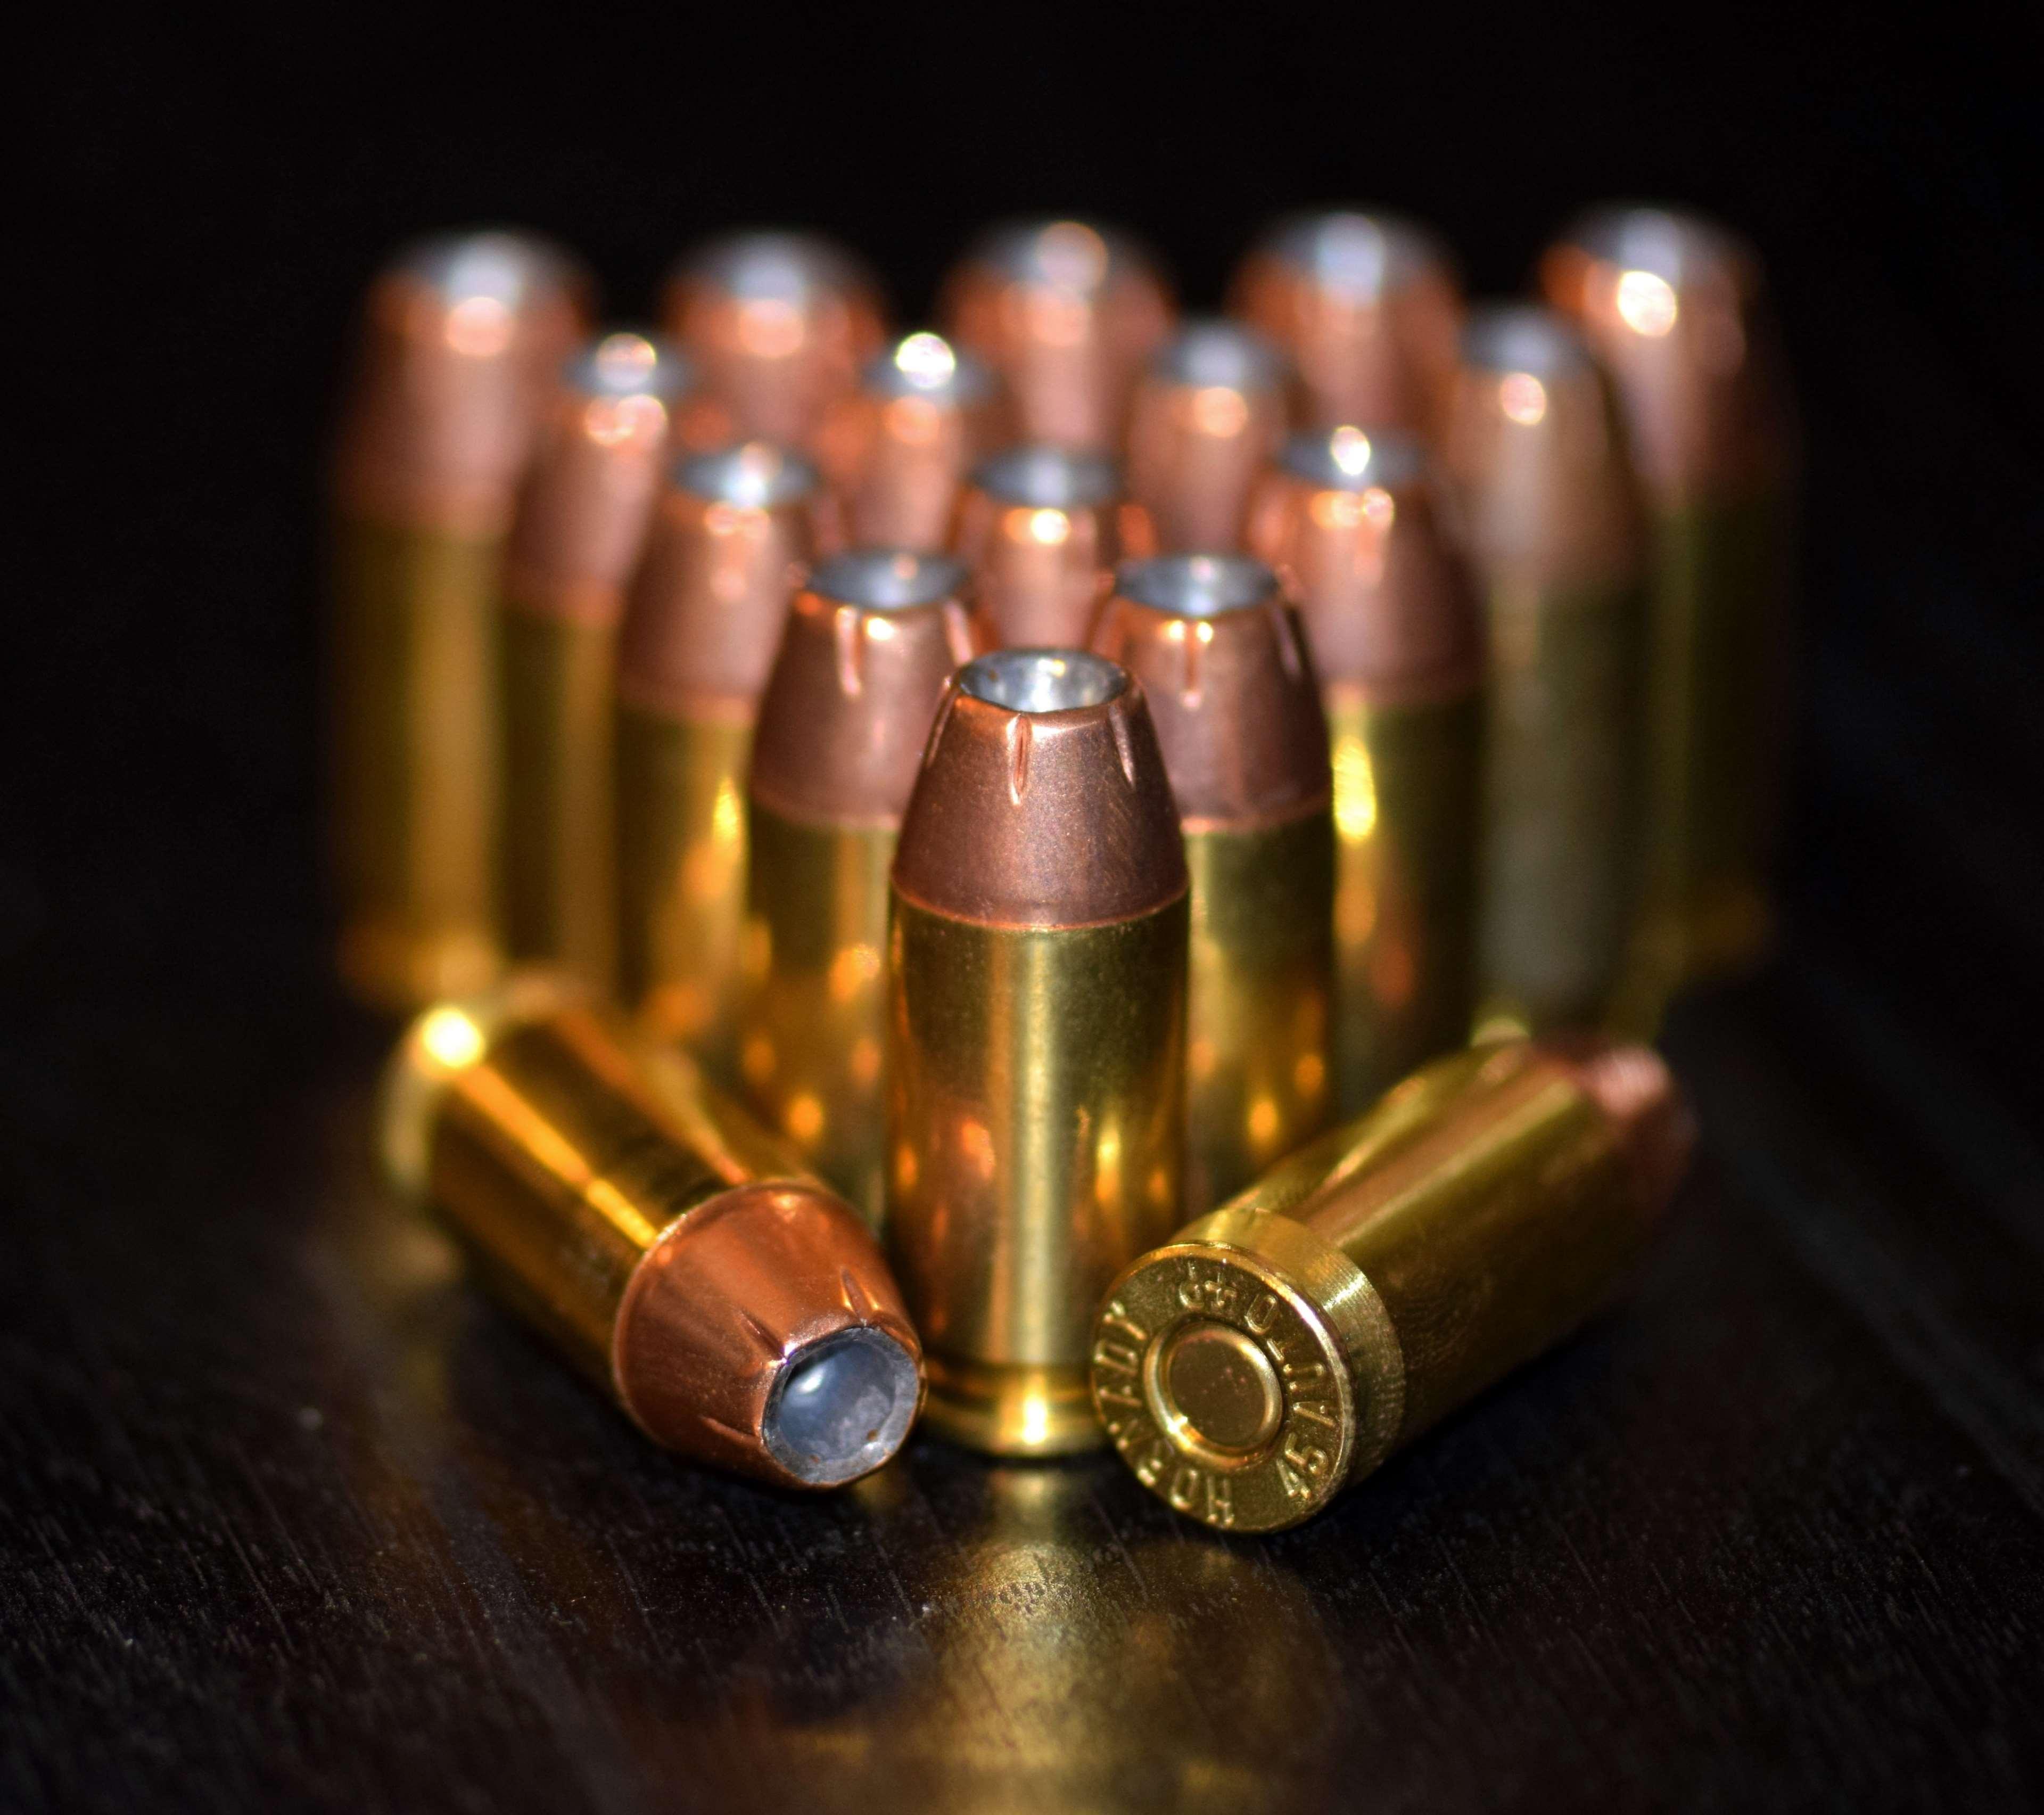 45 acp, acp, ammo, ammunition, brass, bullets, caliber